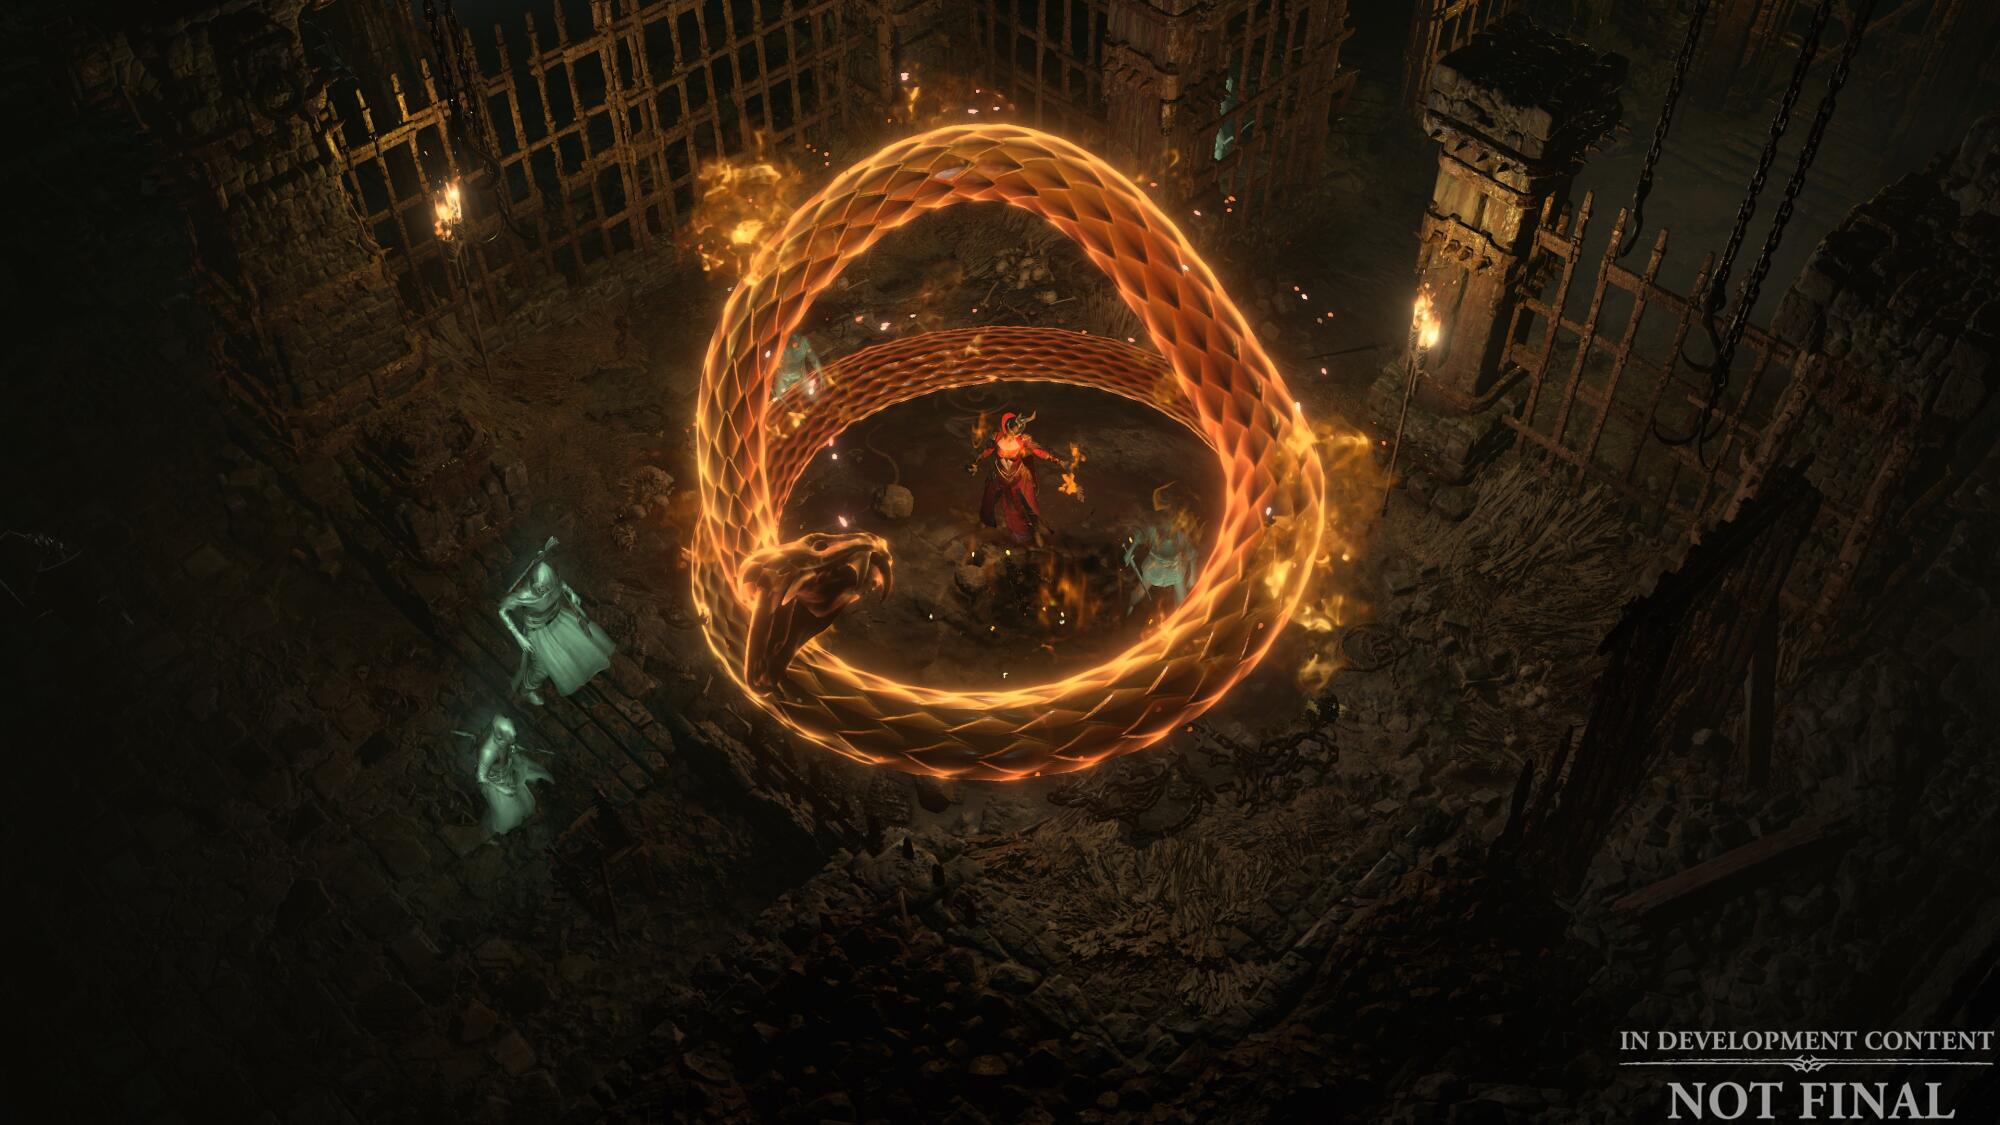 "Diablo IV" promises hours of metaphorical hellish action.